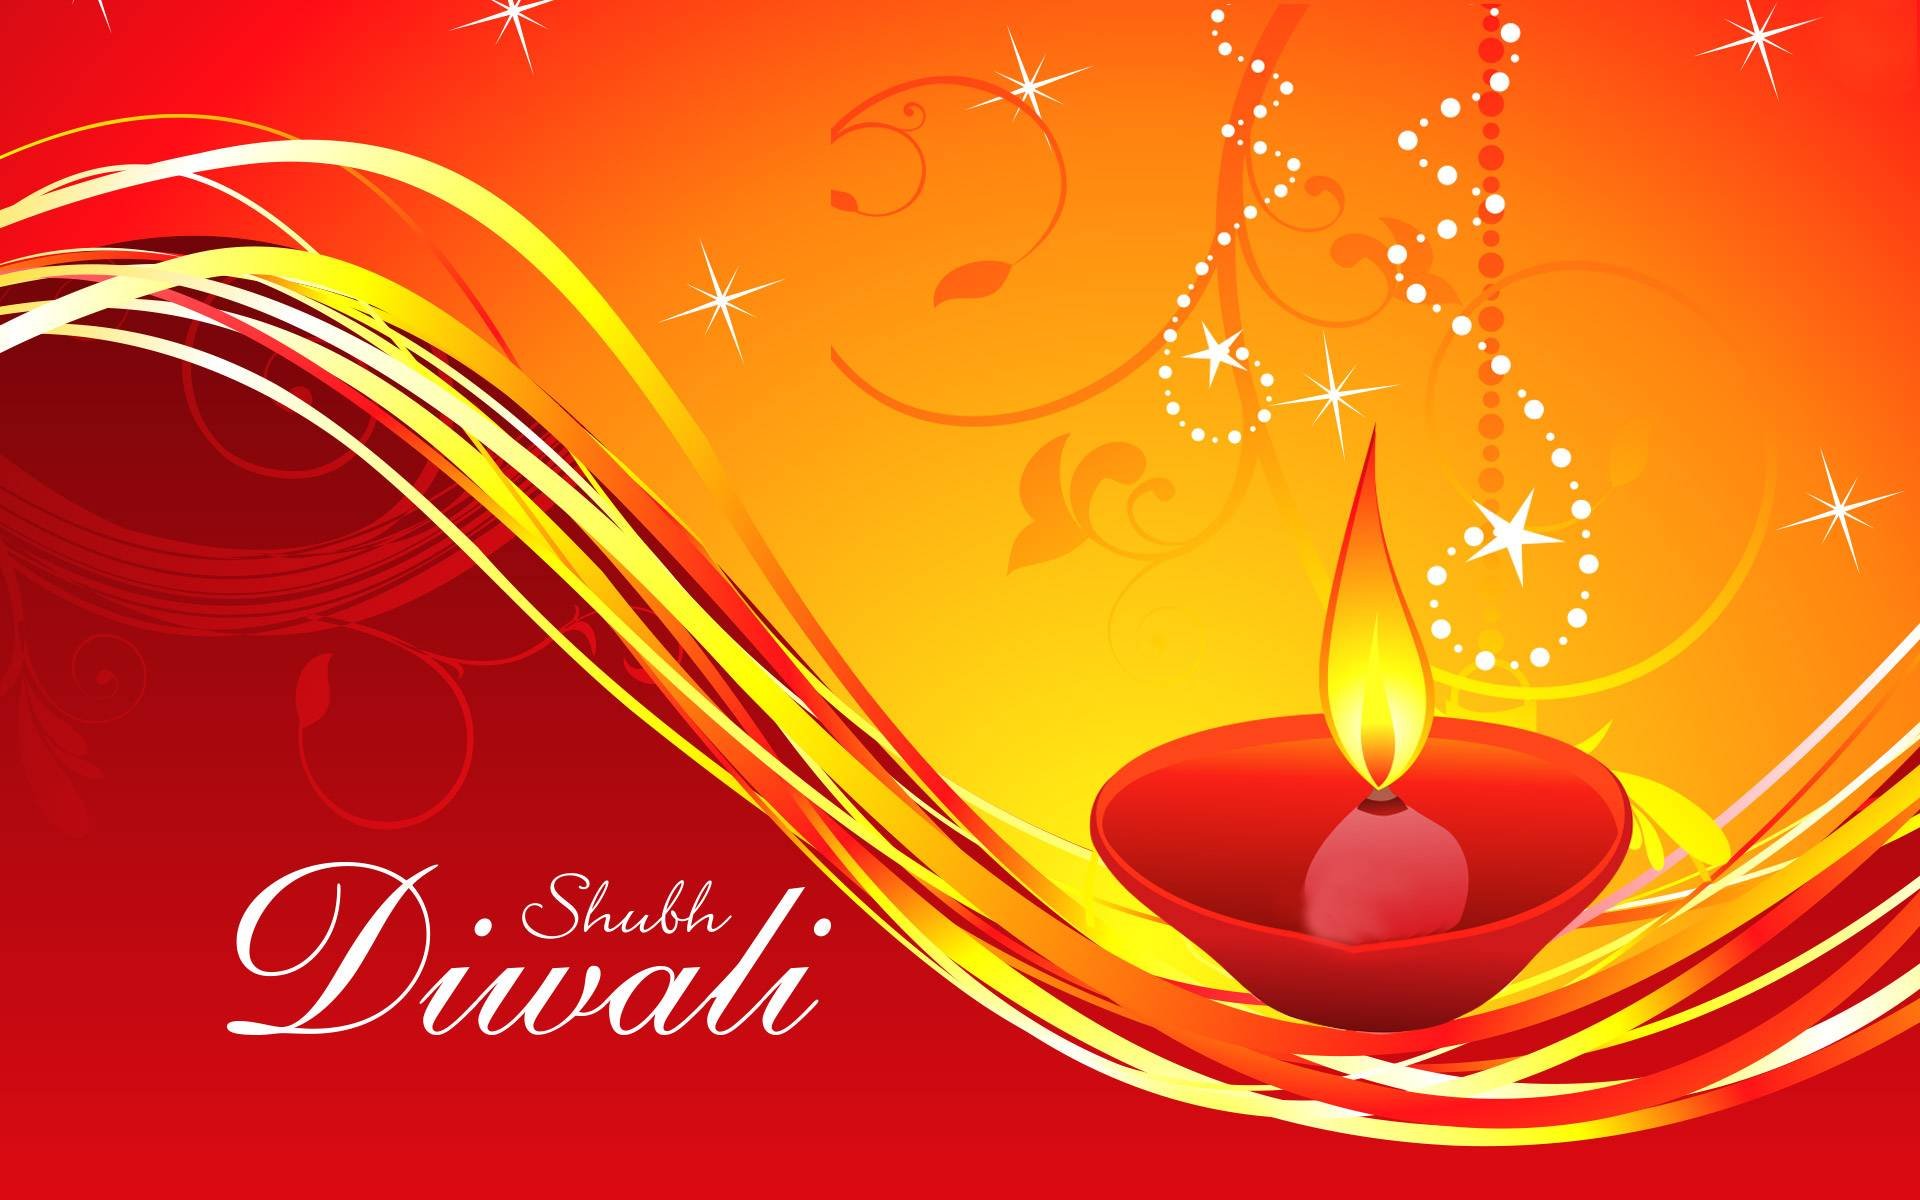 Diwali Deepavali Indian Festival Wallpapers Hd Desktop And Mobile